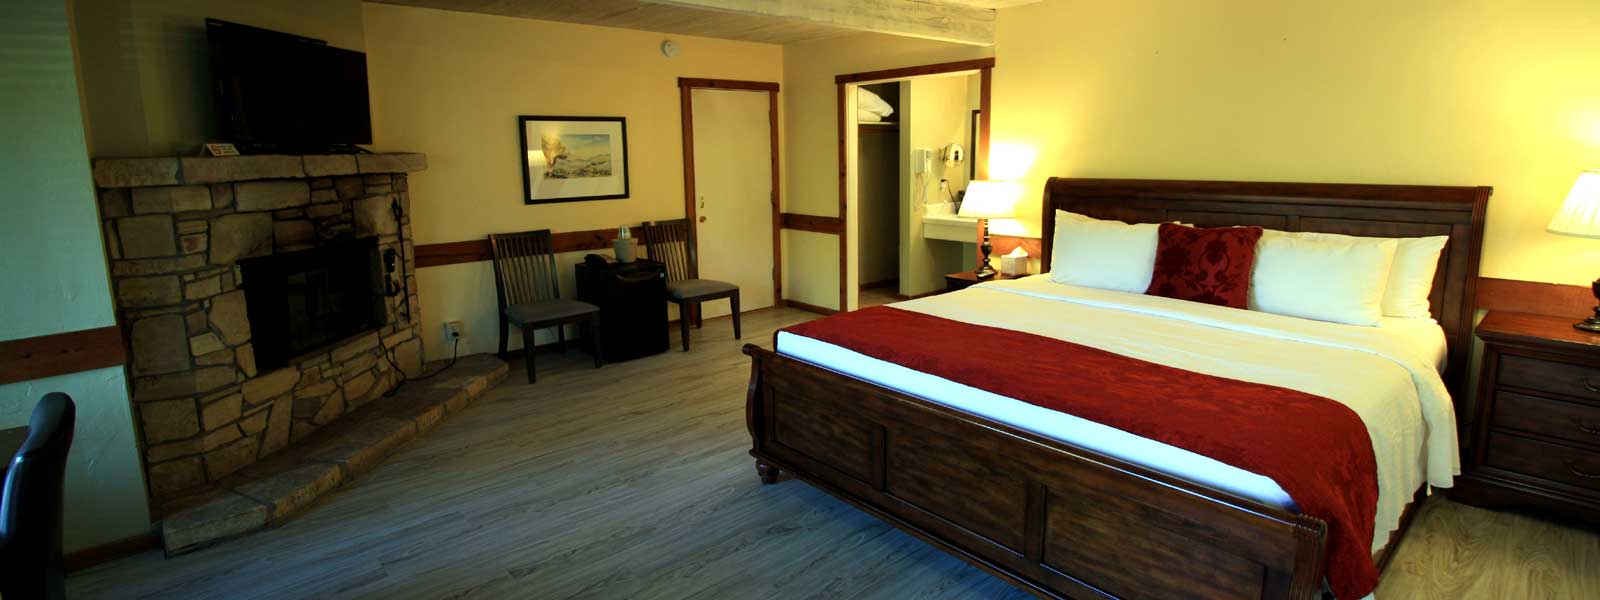 Motels in San Luis Obispo Budget Discount 3 Star Rating 